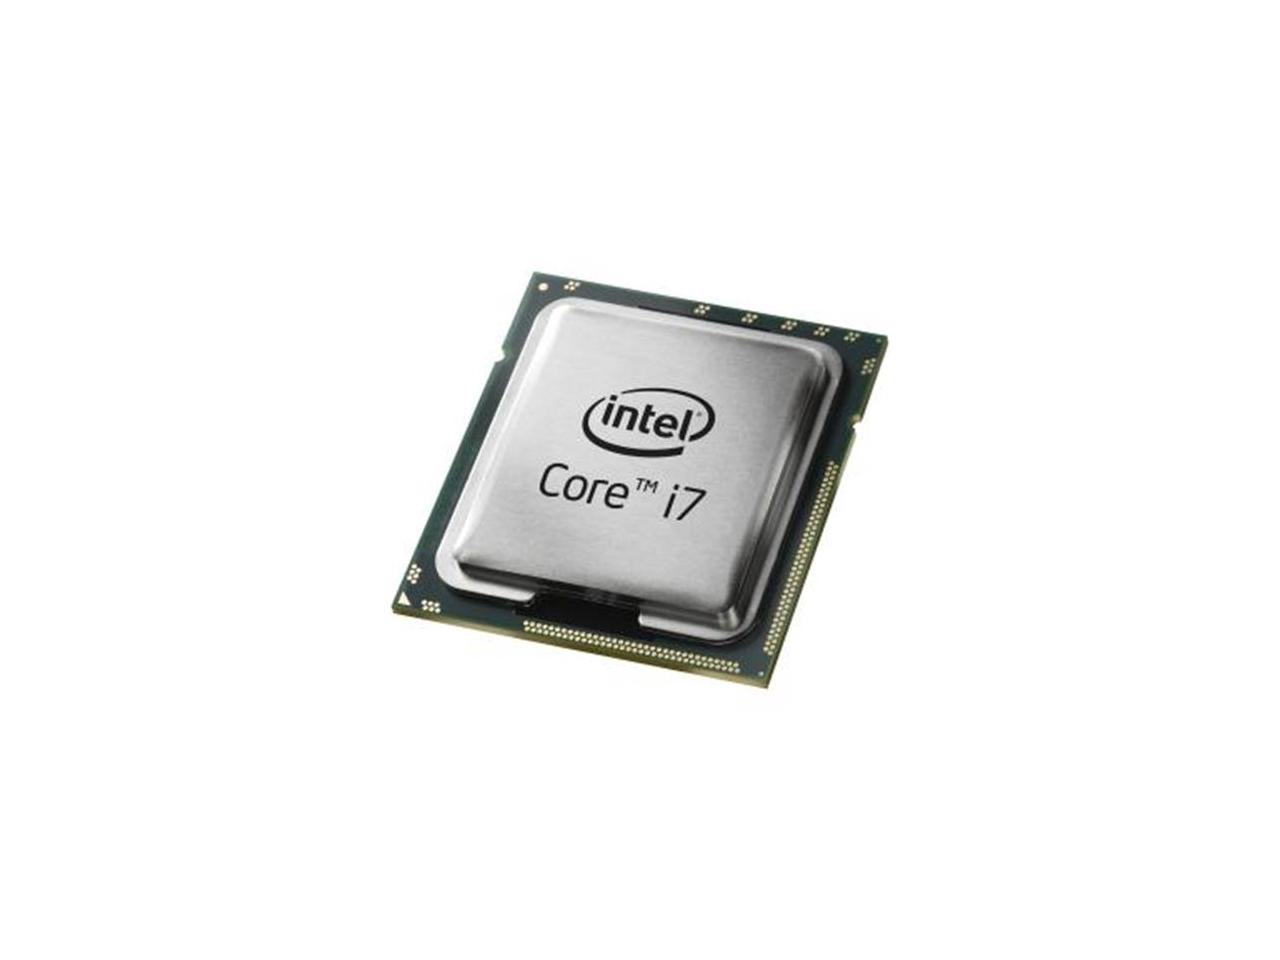 Intel Core i7-4770 - Core i7 4th Gen Haswell 3.4 GHz LGA 1150 84W Intel HD Graphics 4600 Desktop Processor BX80646I74770 - Newegg.com